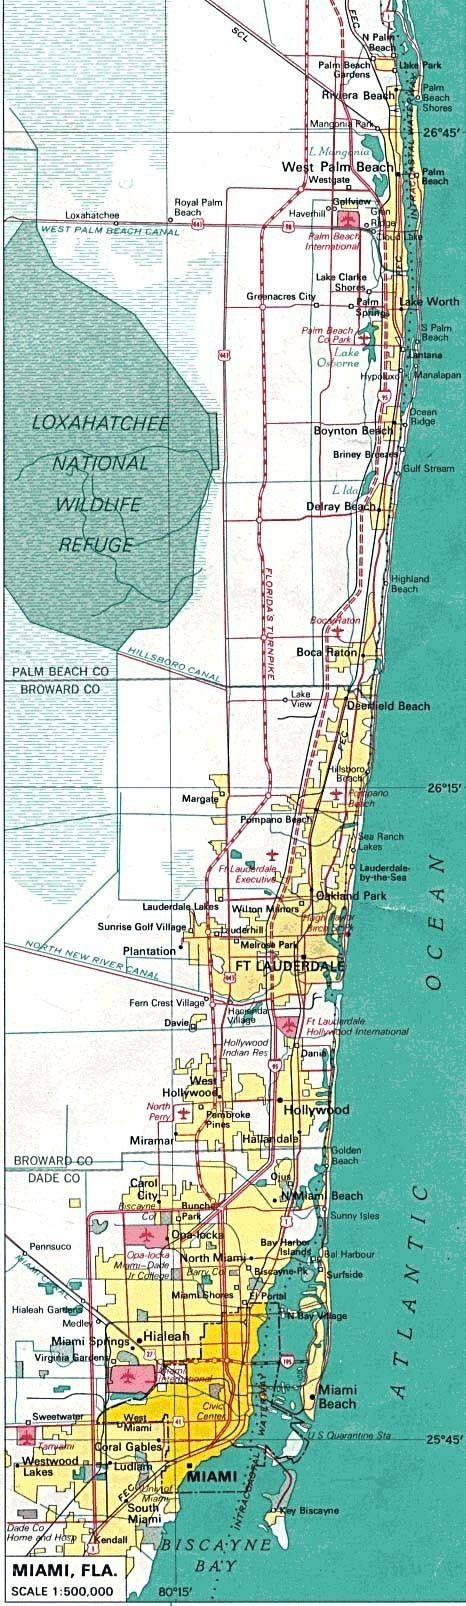 Miami metropolitan area US Metropolitan Area Maps PerryCastaeda Map Collection UT